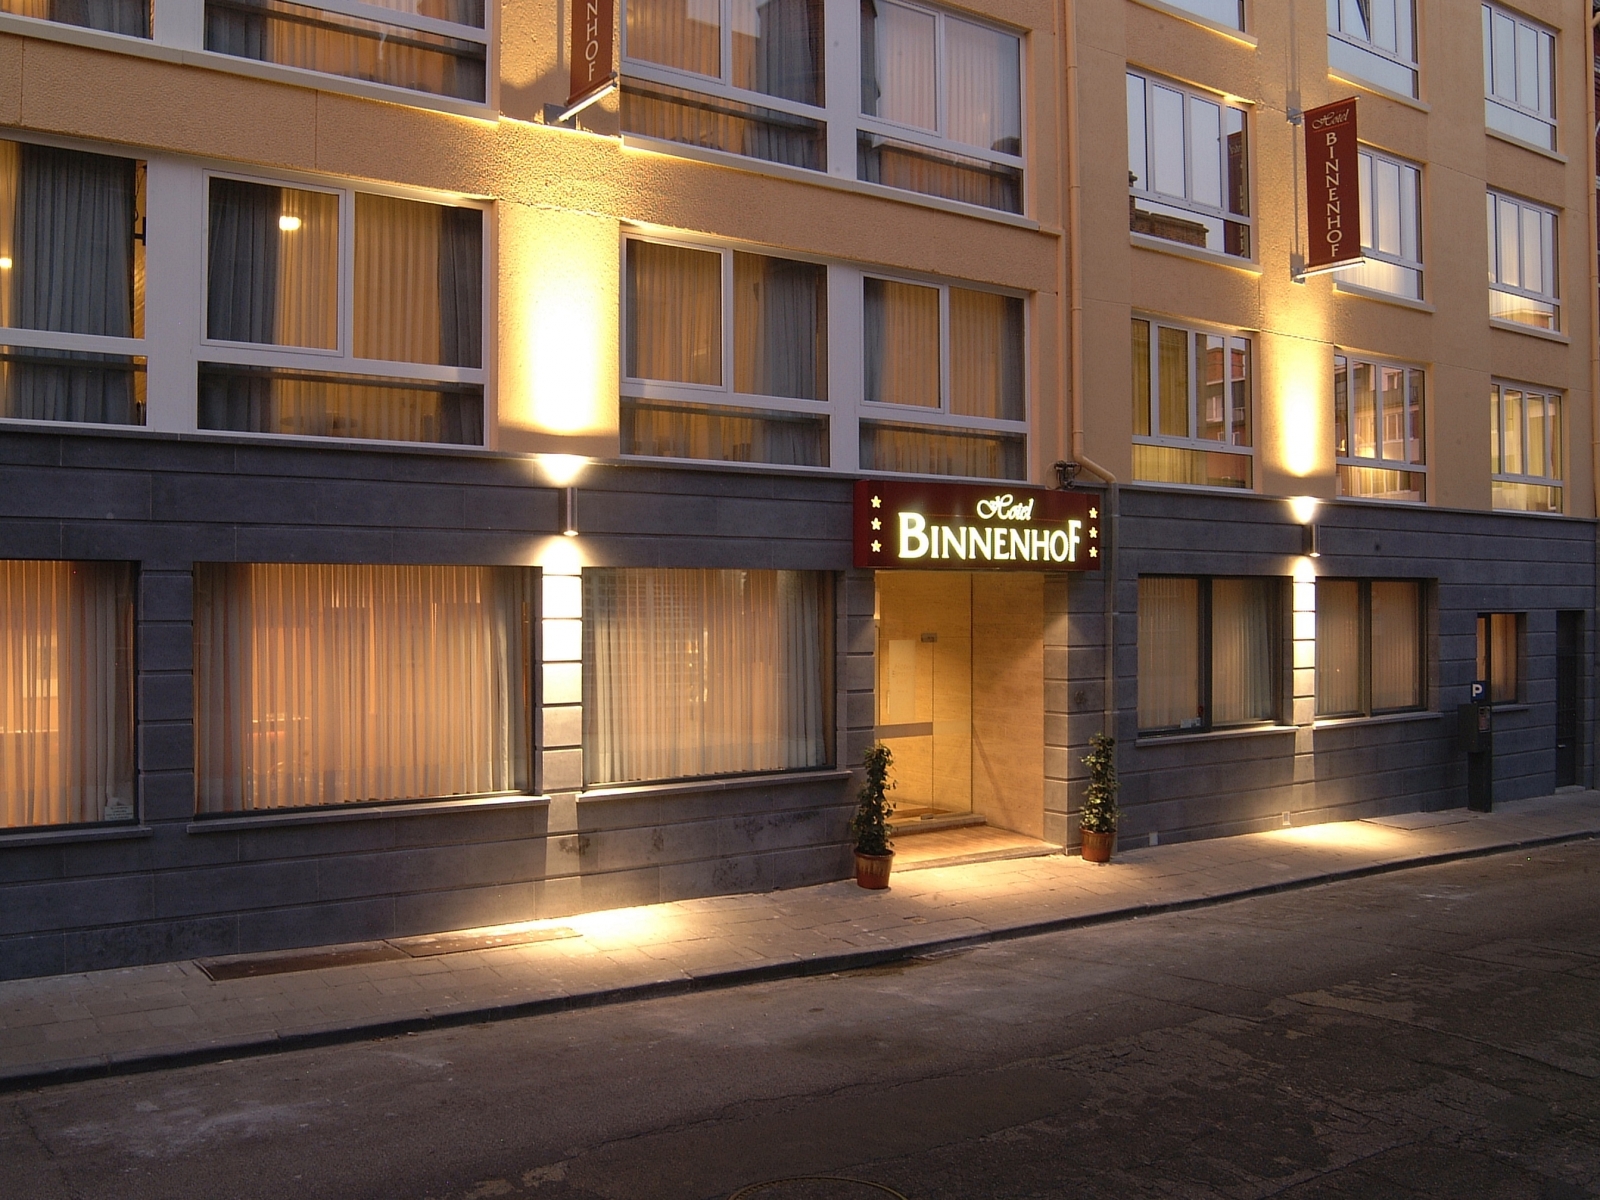 Hotel Binnenhof <br/>99.00 ew <br/> <a href='http://vakantieoplossing.nl/outpage/?id=ce877034da17f447a0c5539ce2a4b95f' target='_blank'>View Details</a>